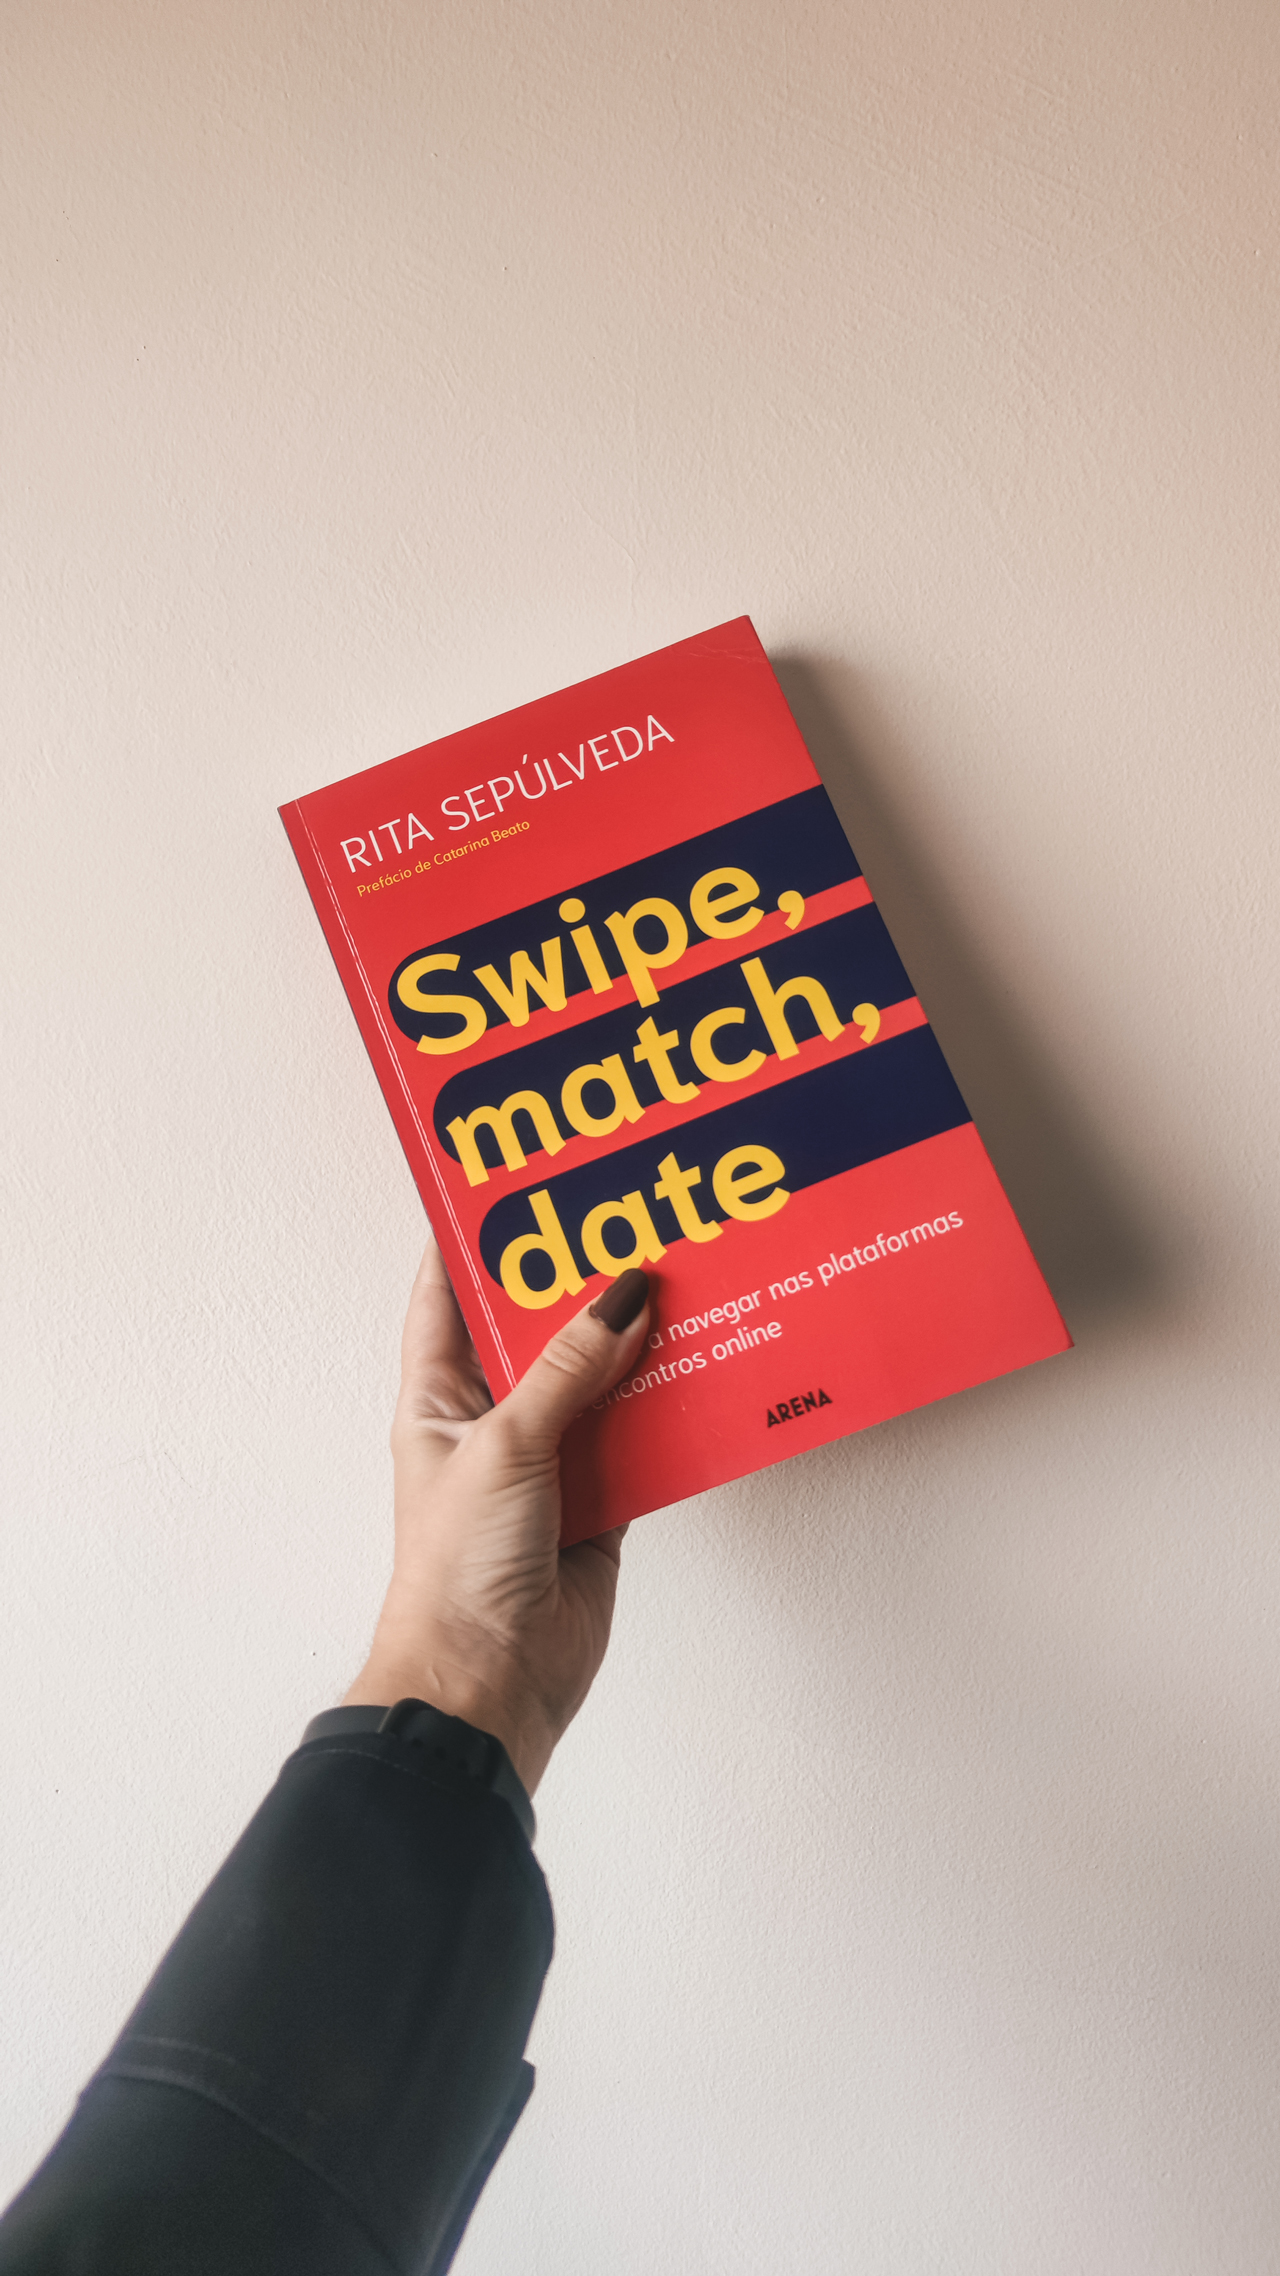 swipe, match, date [rita sepúlveda]